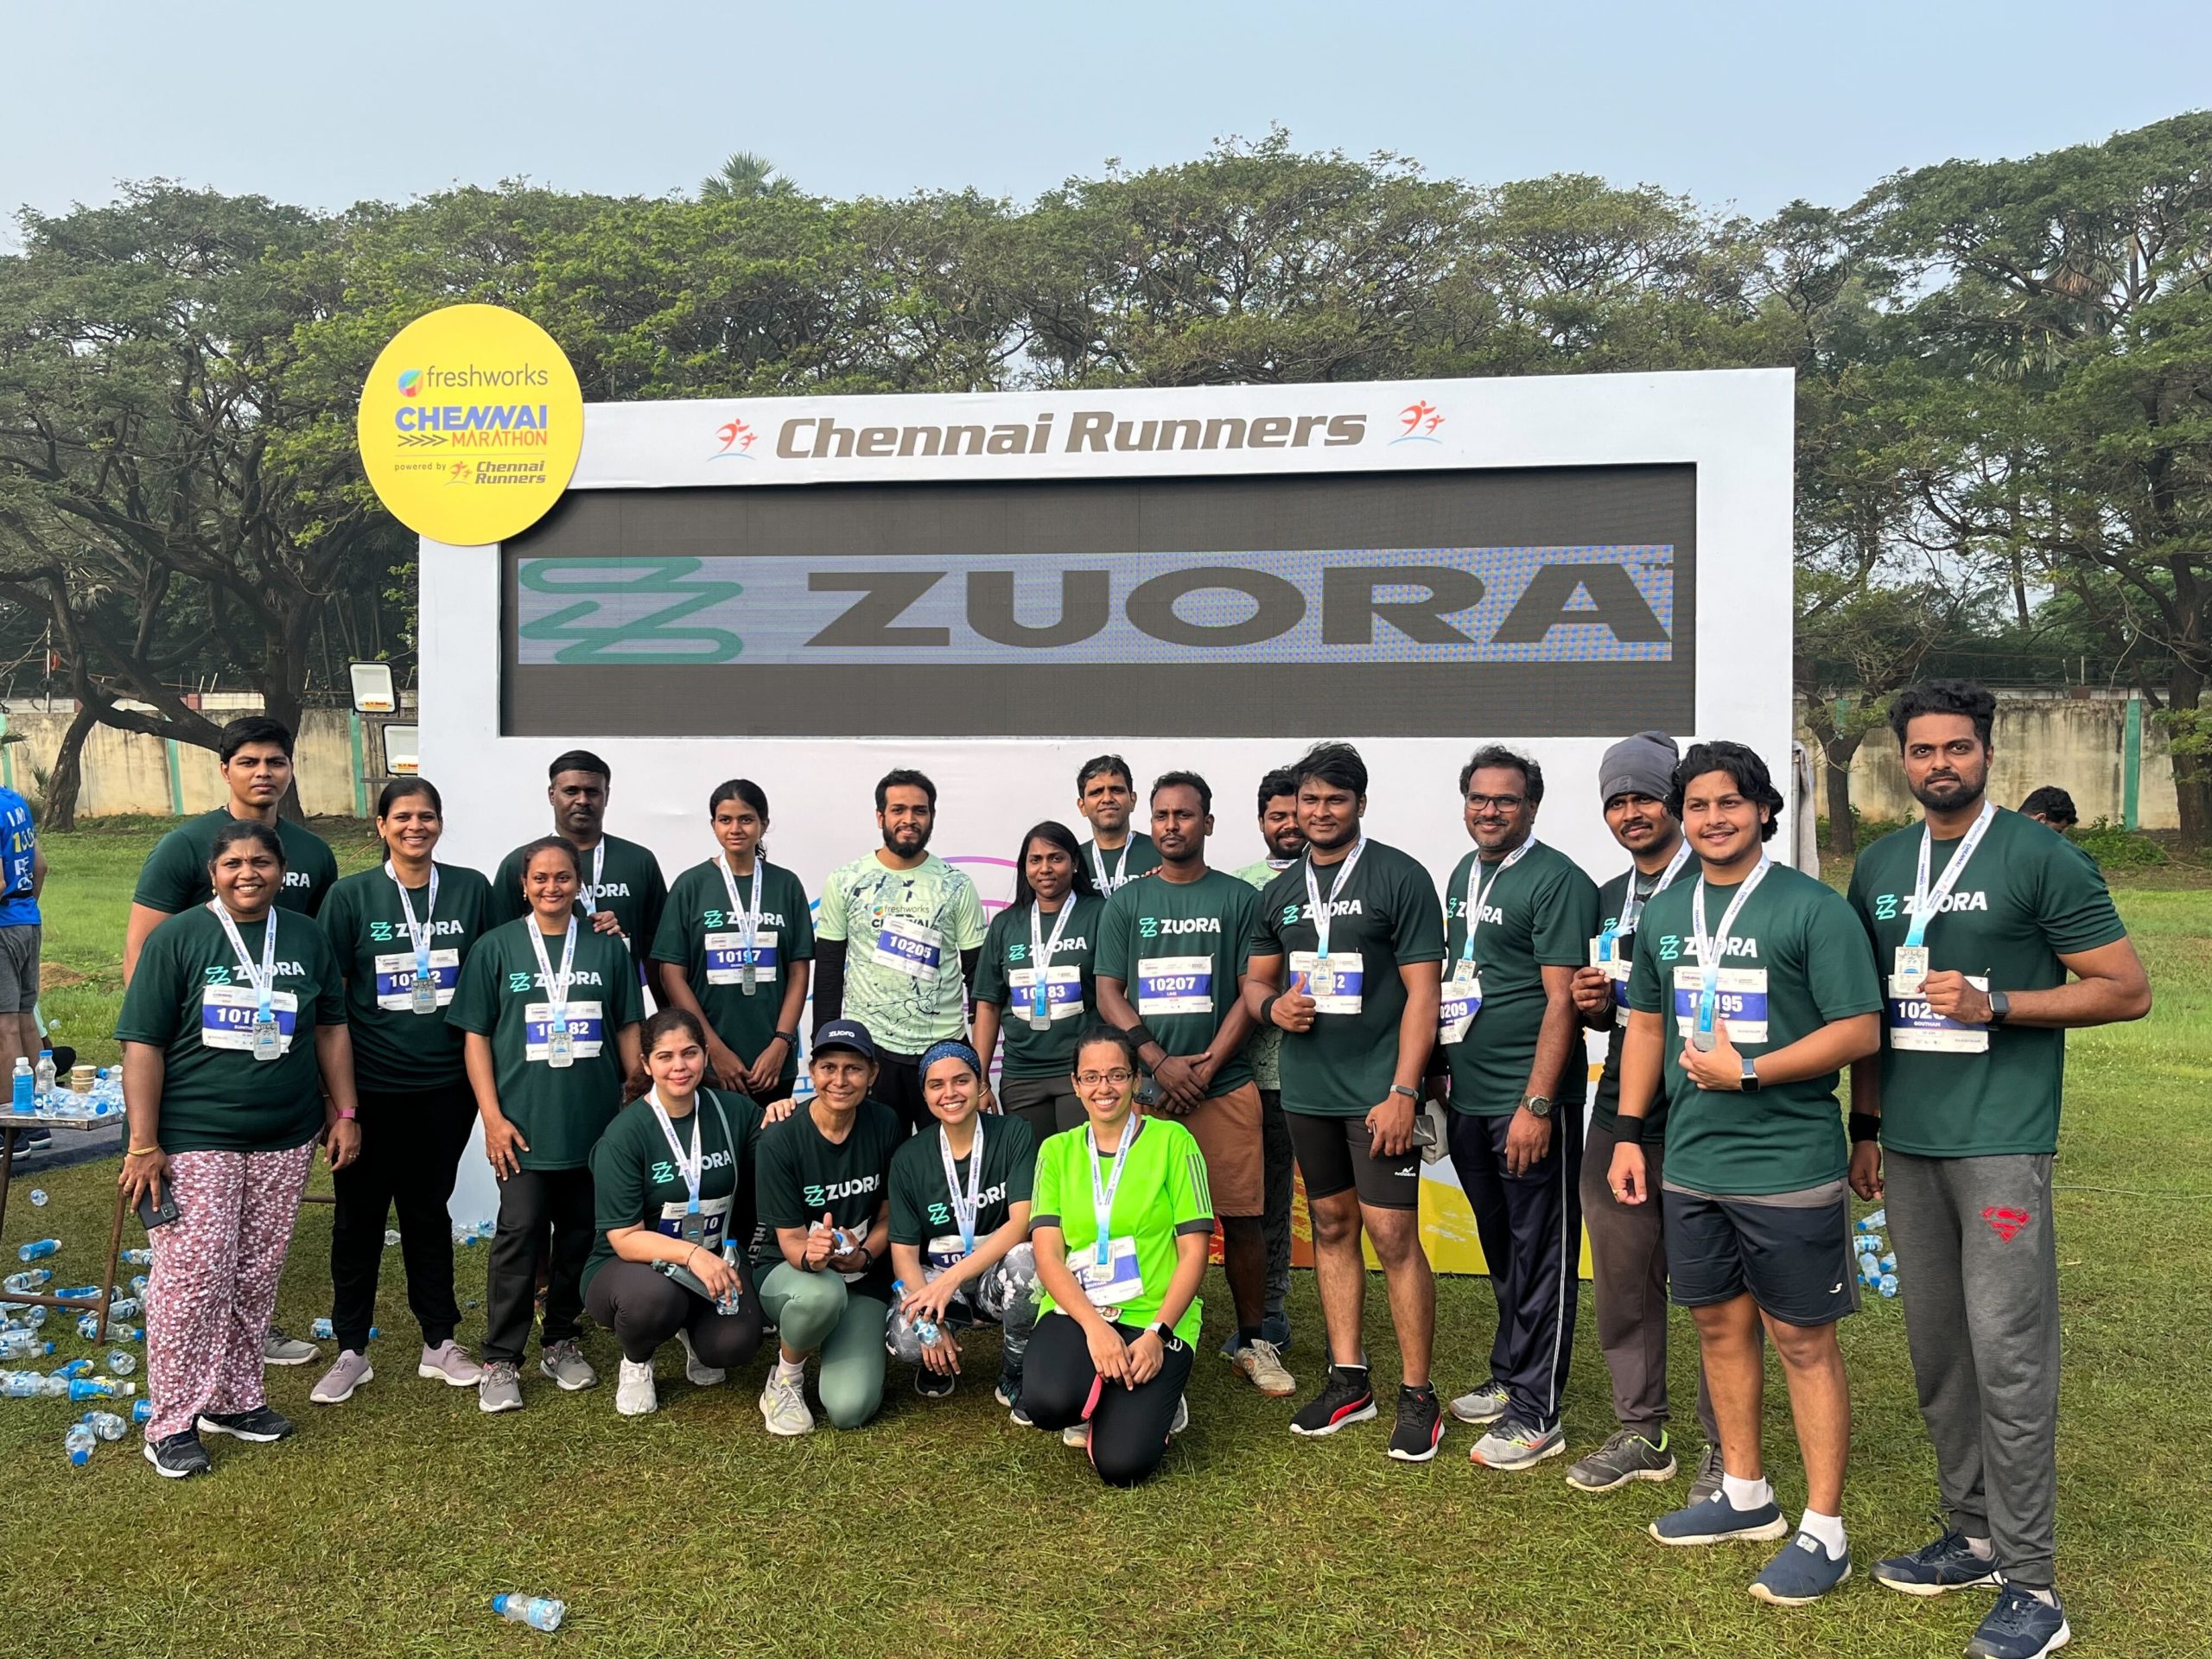 Zuora’s Chennai Marathon team runs on team spirit and service